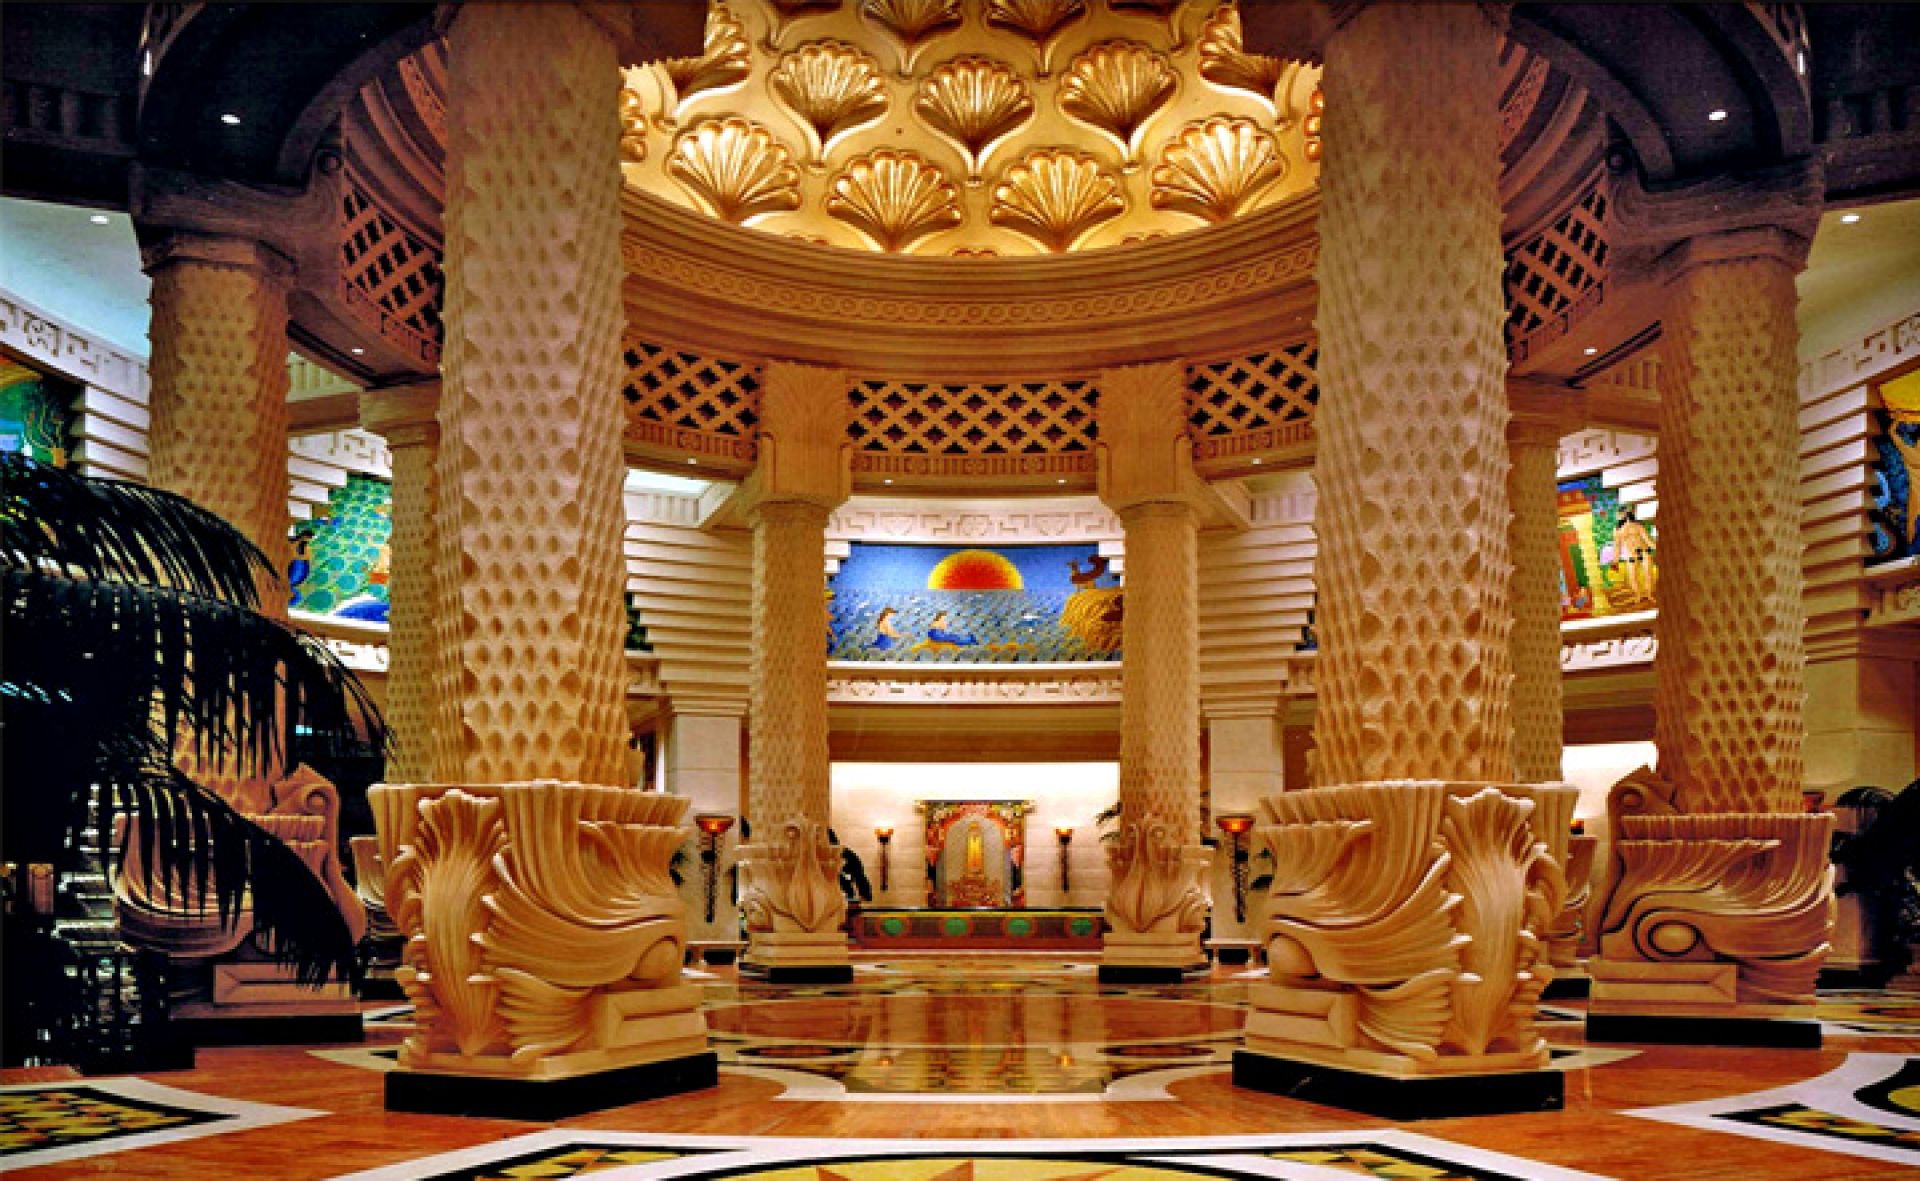 Atlantis Resort Casino Bahamas